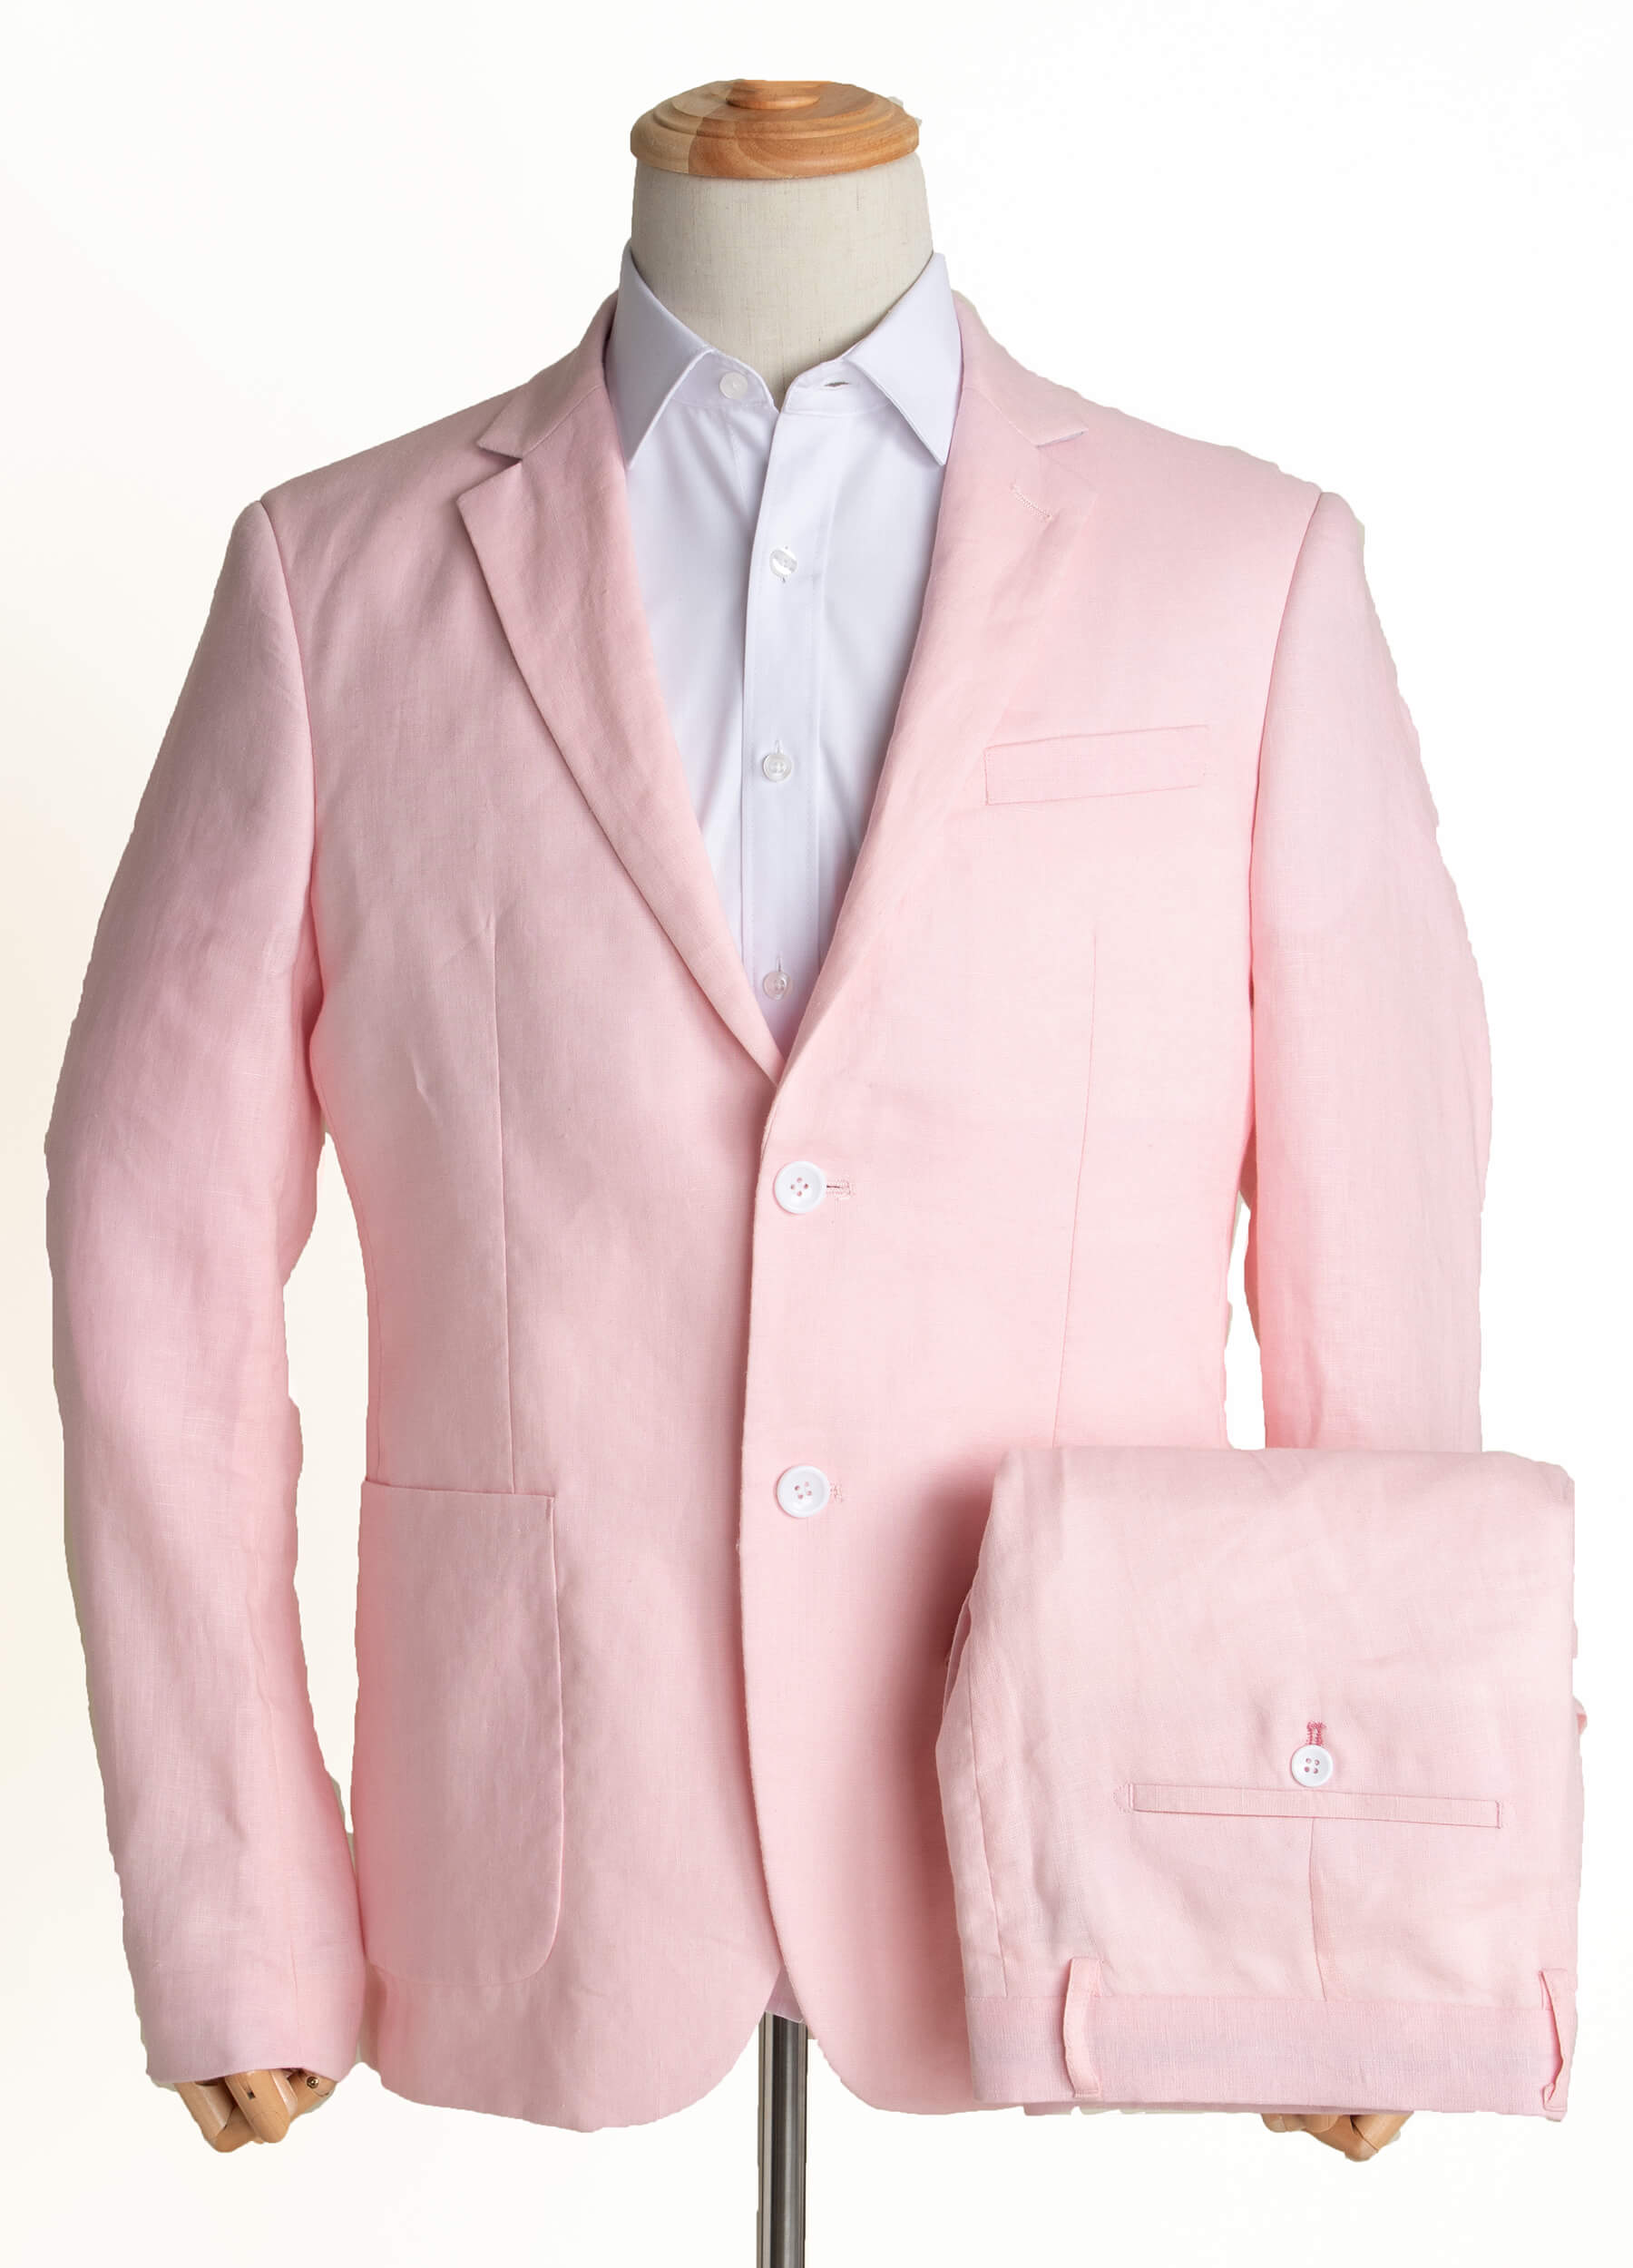 Men's pink linen suit